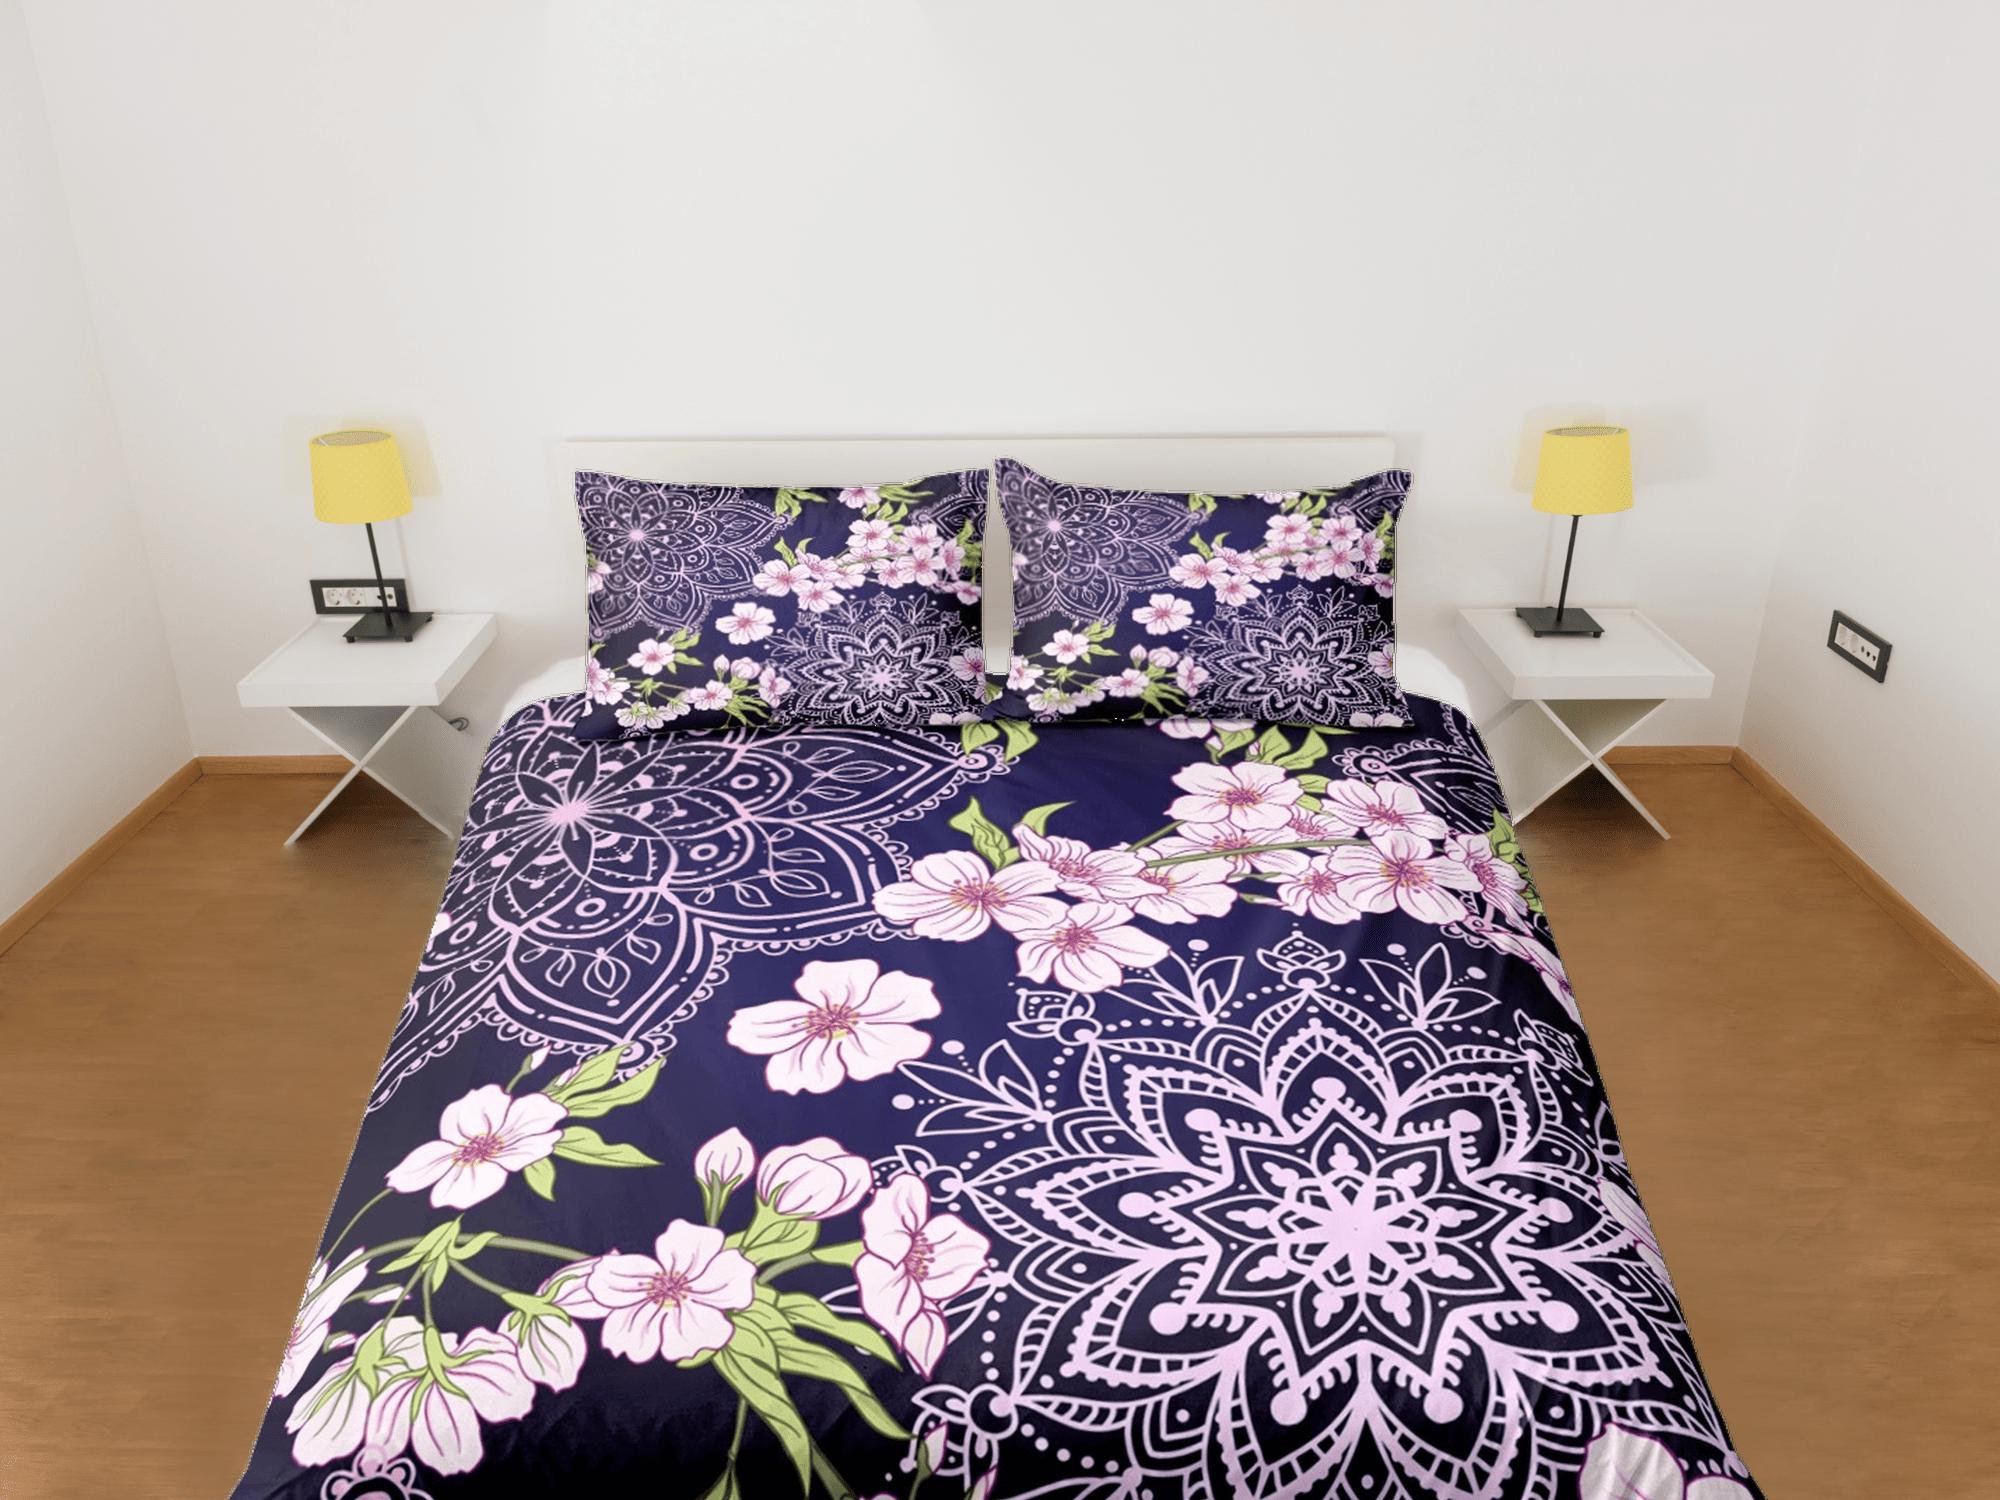 daintyduvet Cherry blossom purple bedding floral prints duvet cover queen, king, boho bedding designer bedspread maximalist full size bedding aesthetic